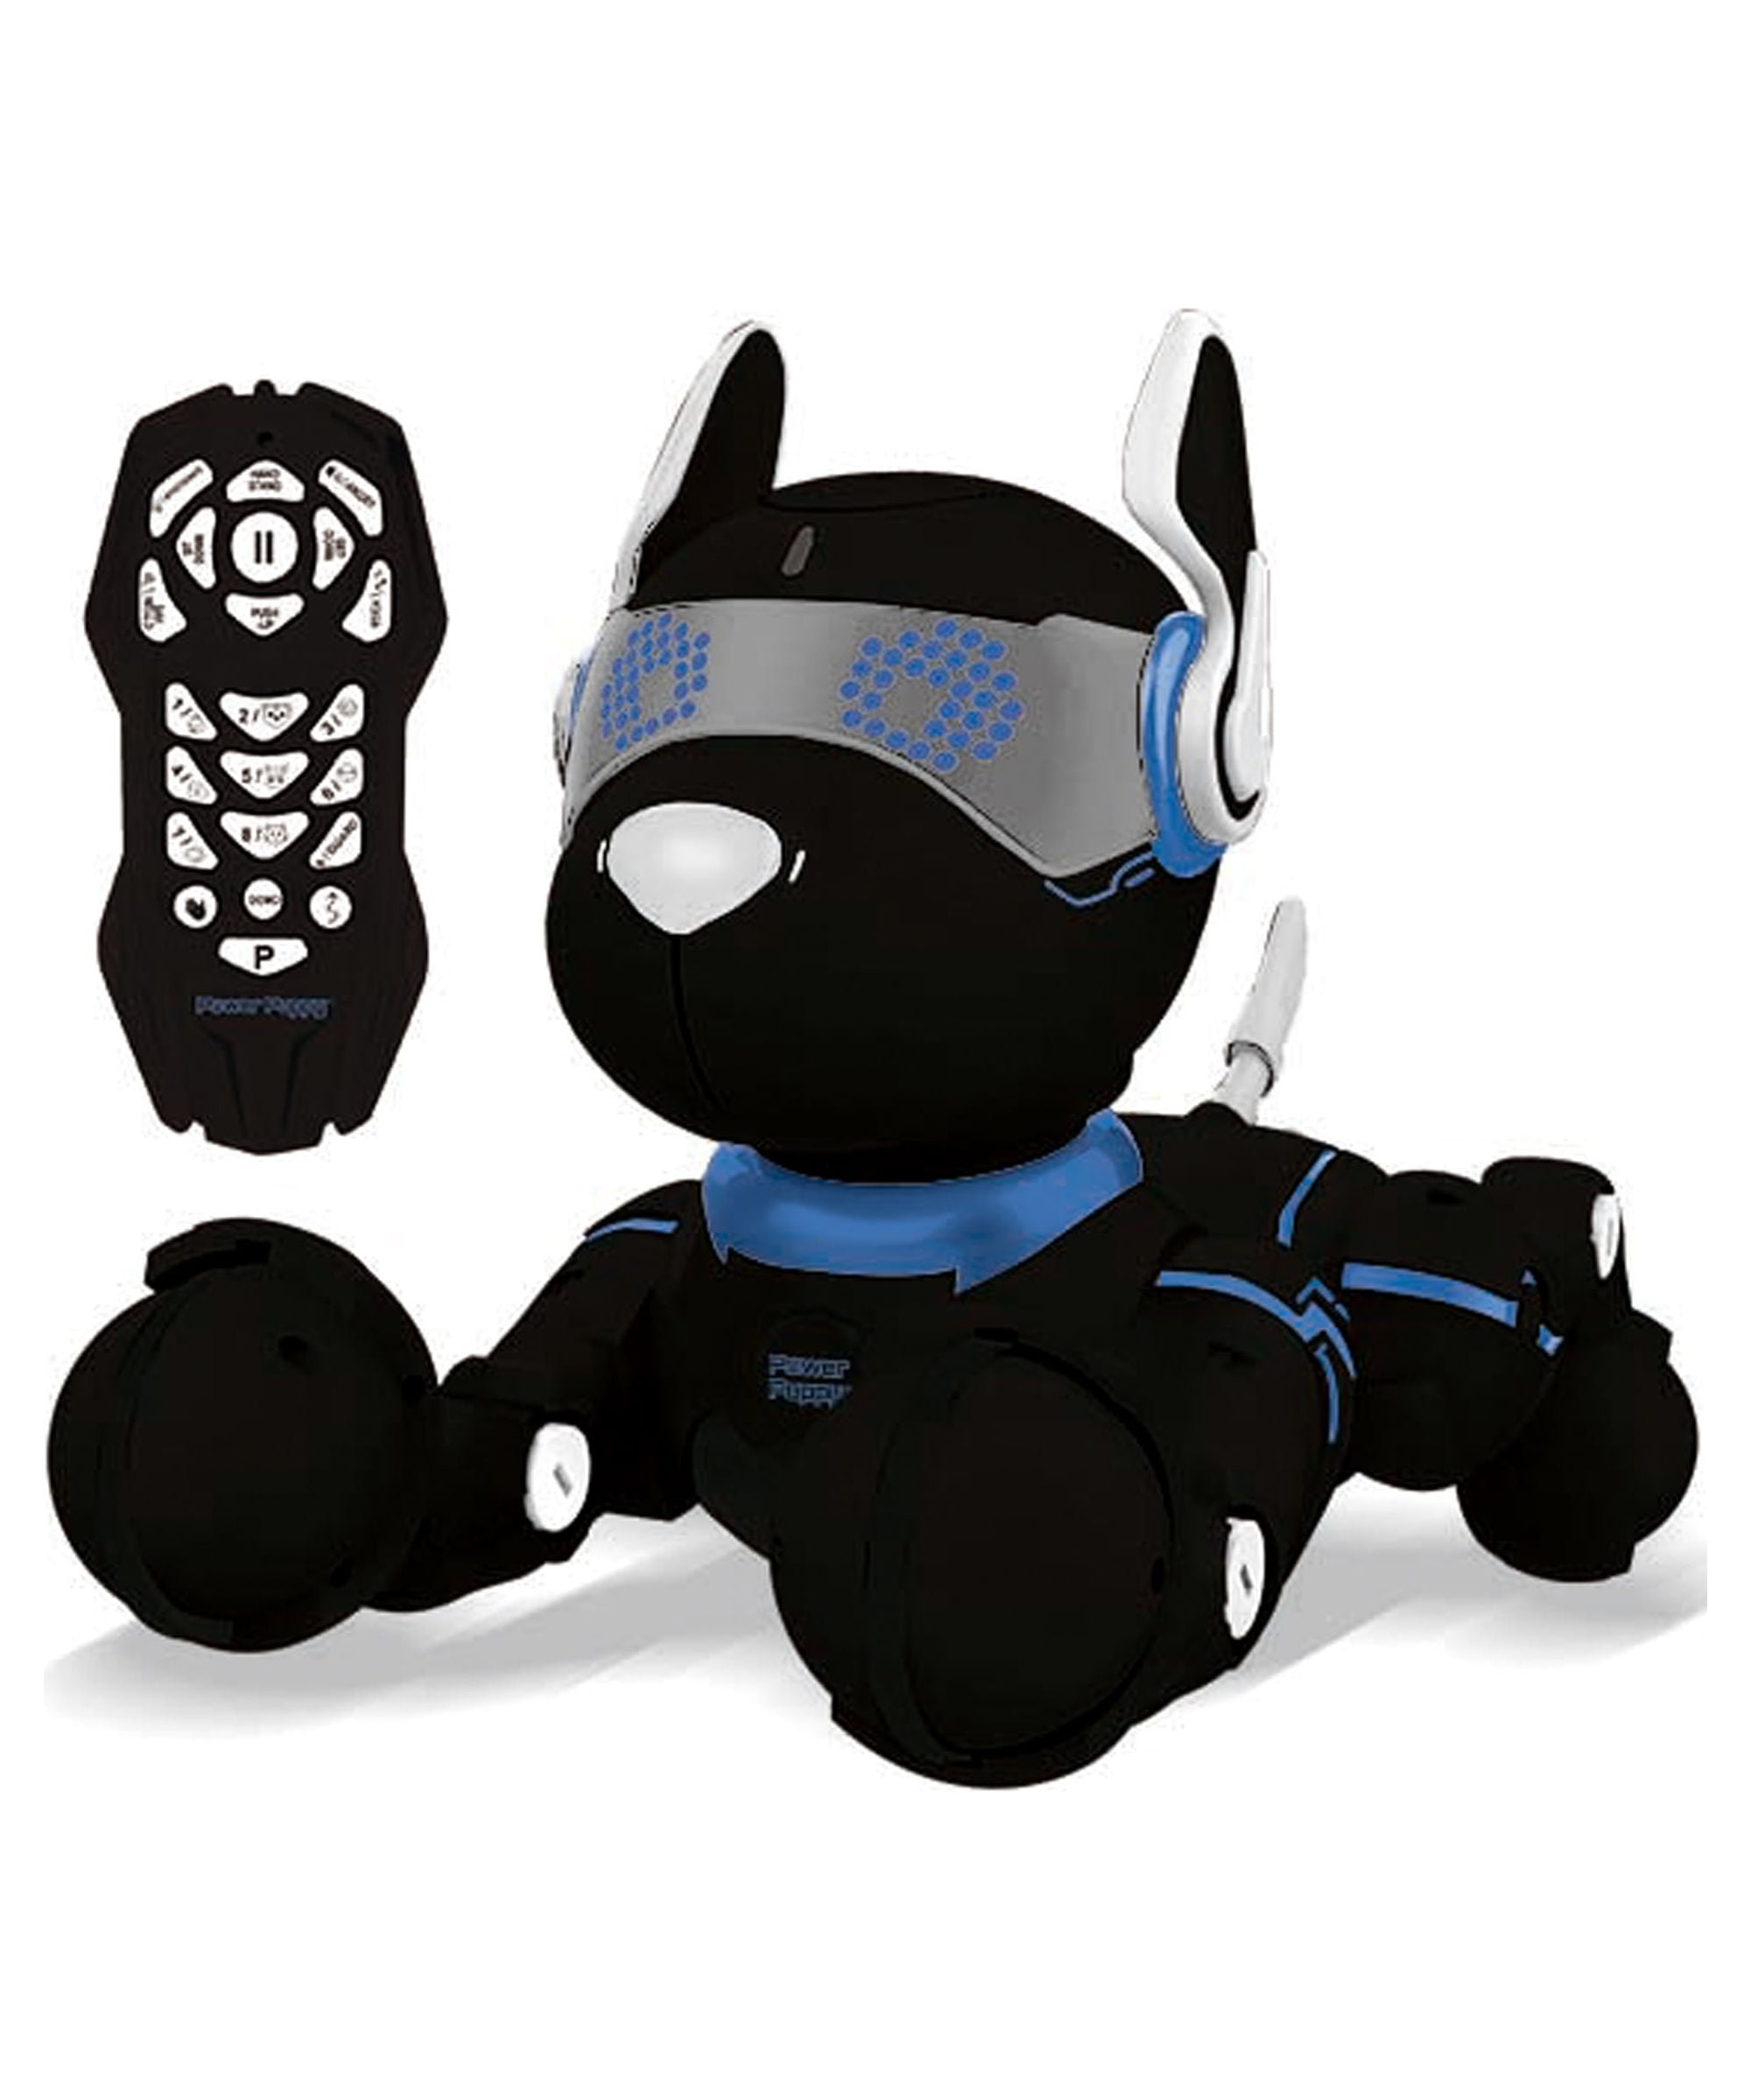 Lexibook- Power Puppy Chien Savant-Robot programmable avec